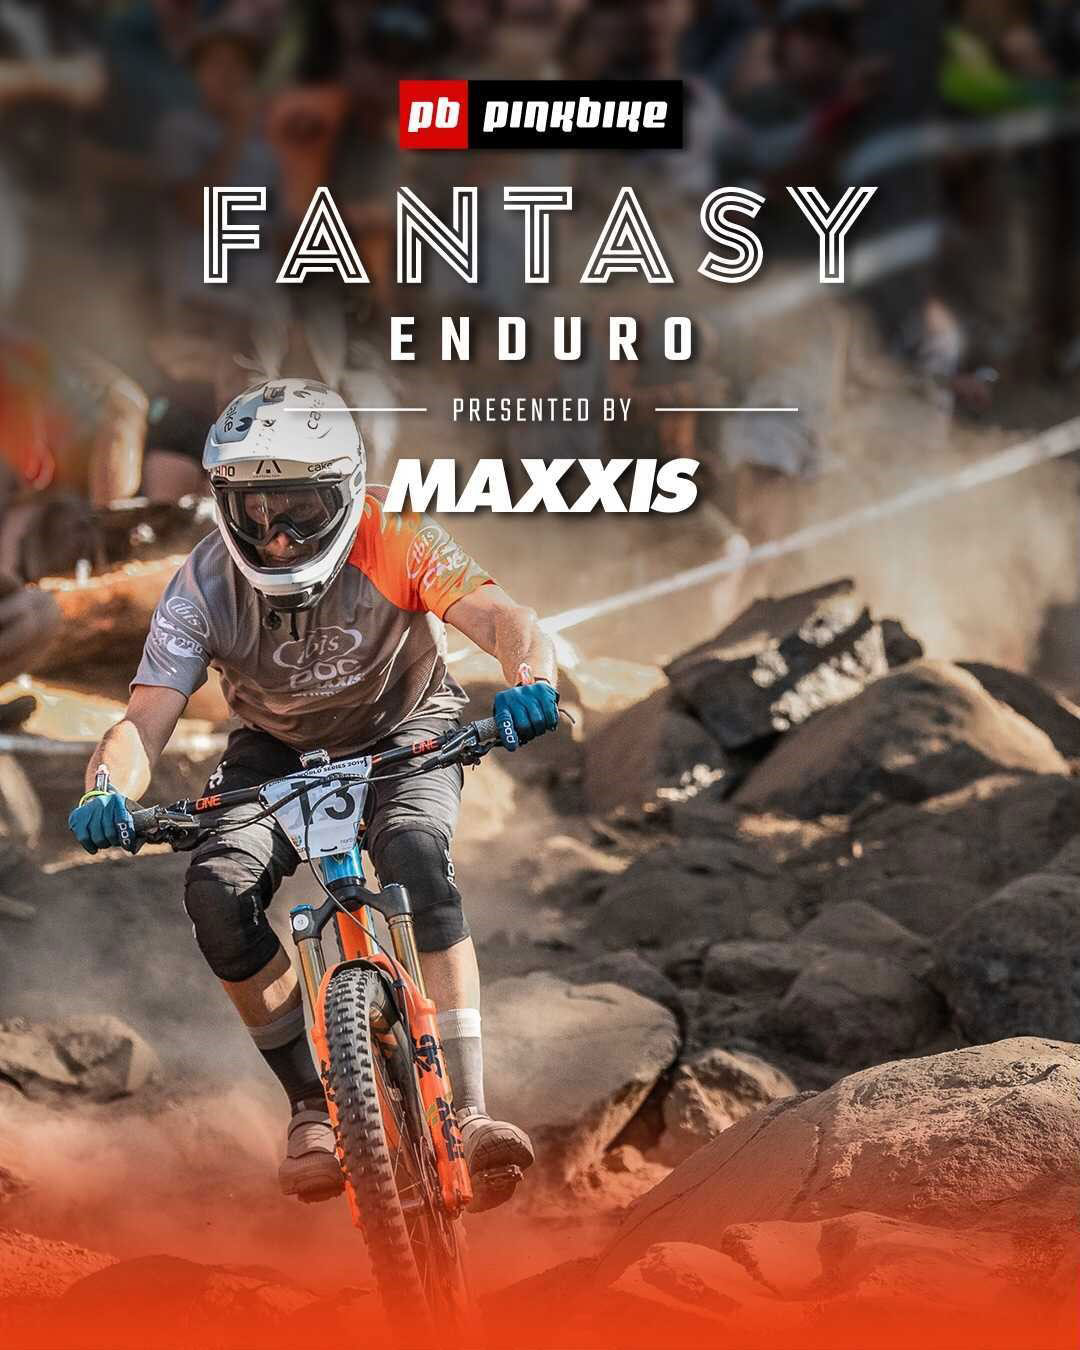 Pink Bike Fantasy Enduro p/b Maxxis